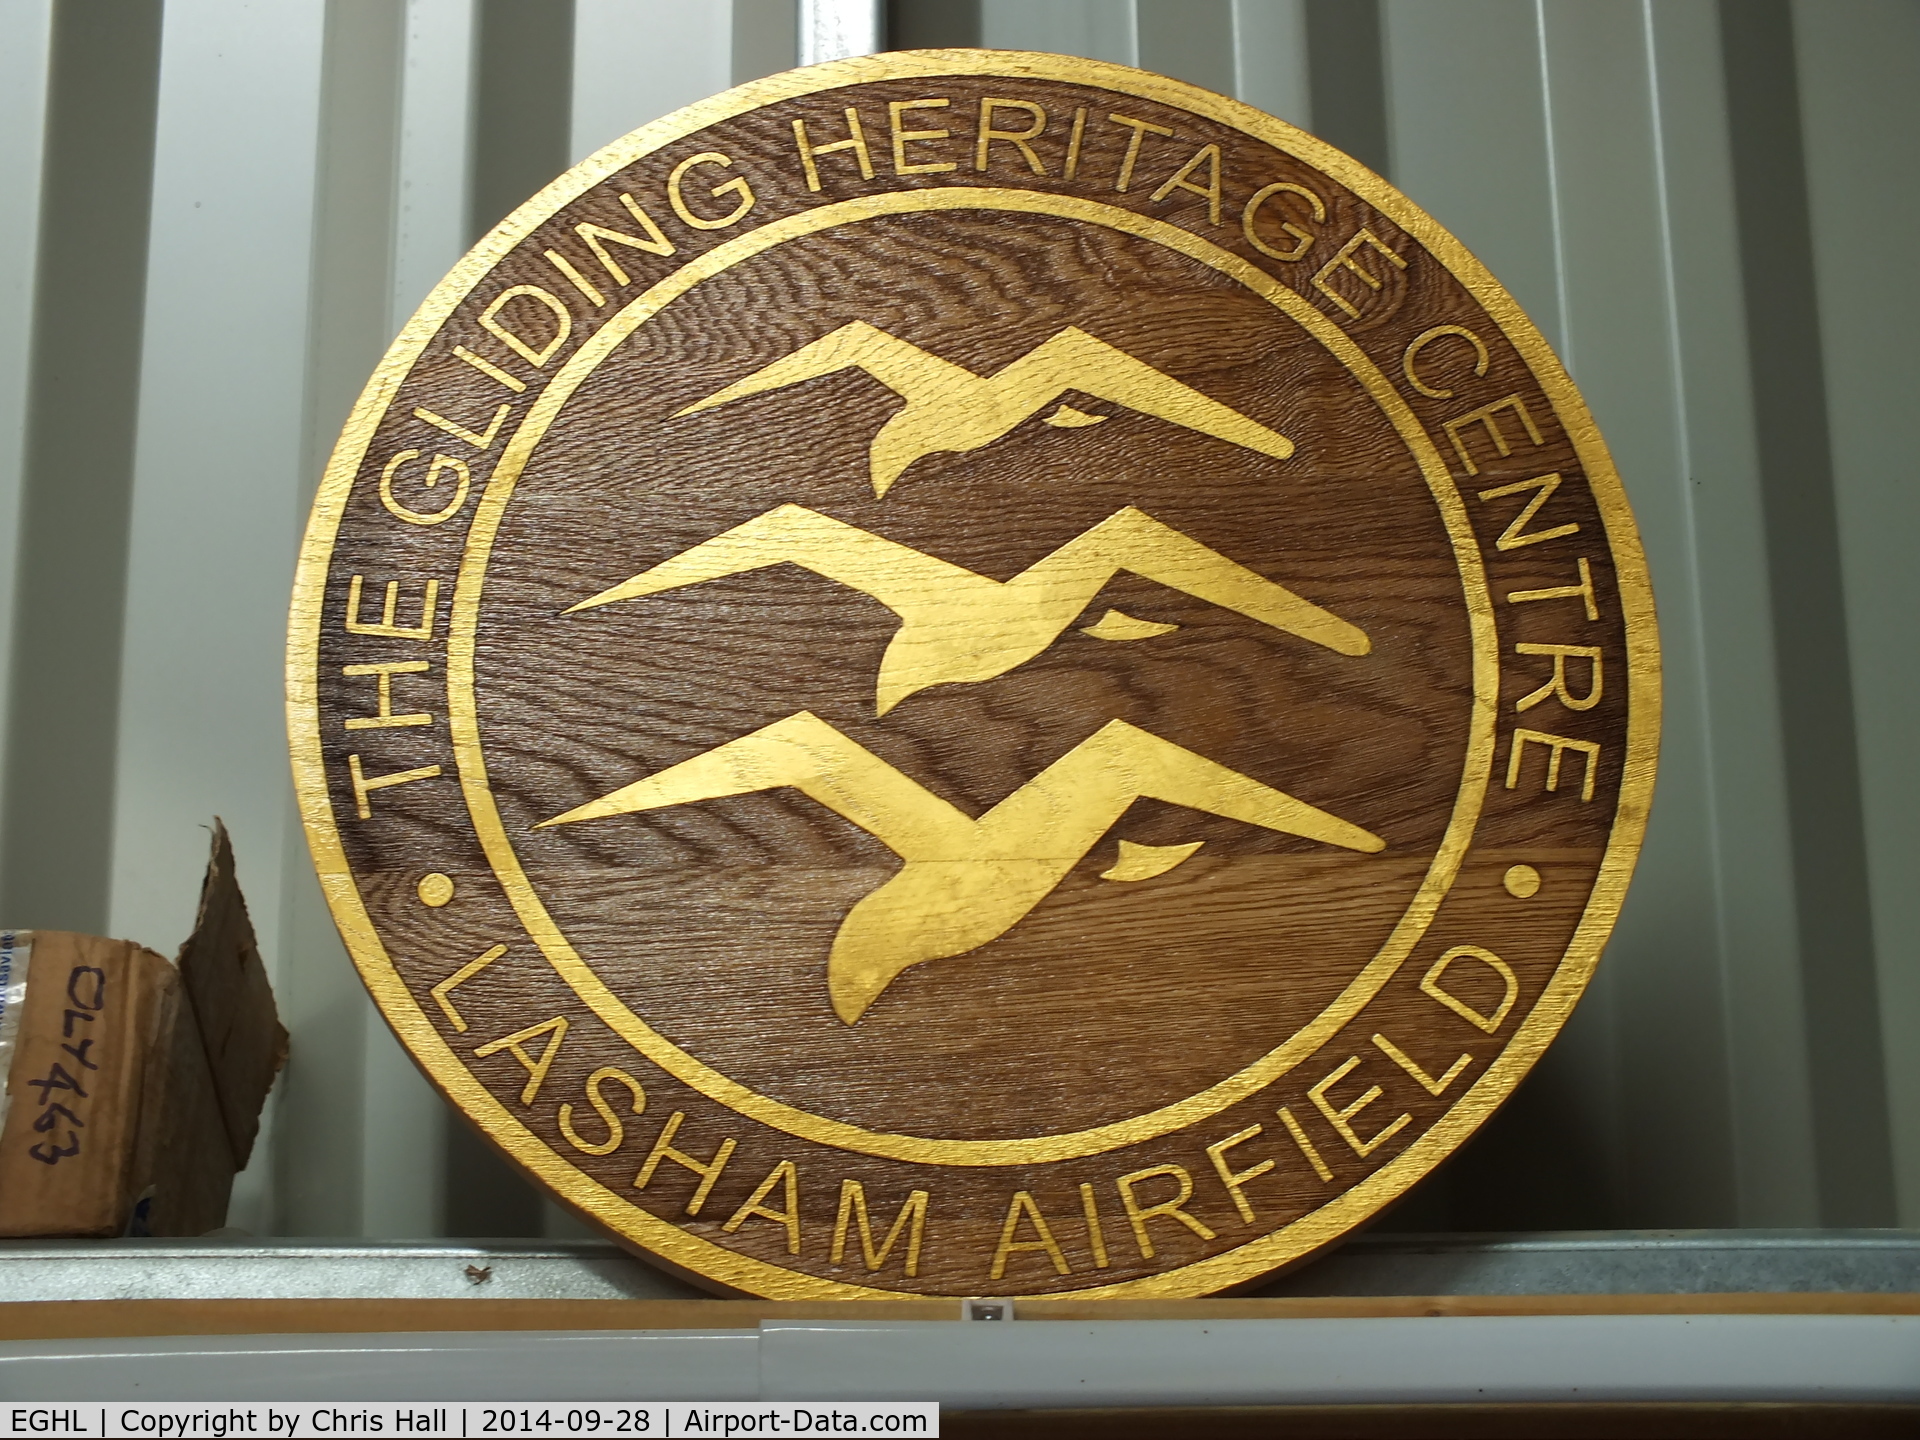 Lasham Airfield Airport, Basingstoke, England United Kingdom (EGHL) - Gliding Heritage Centre, Lasham